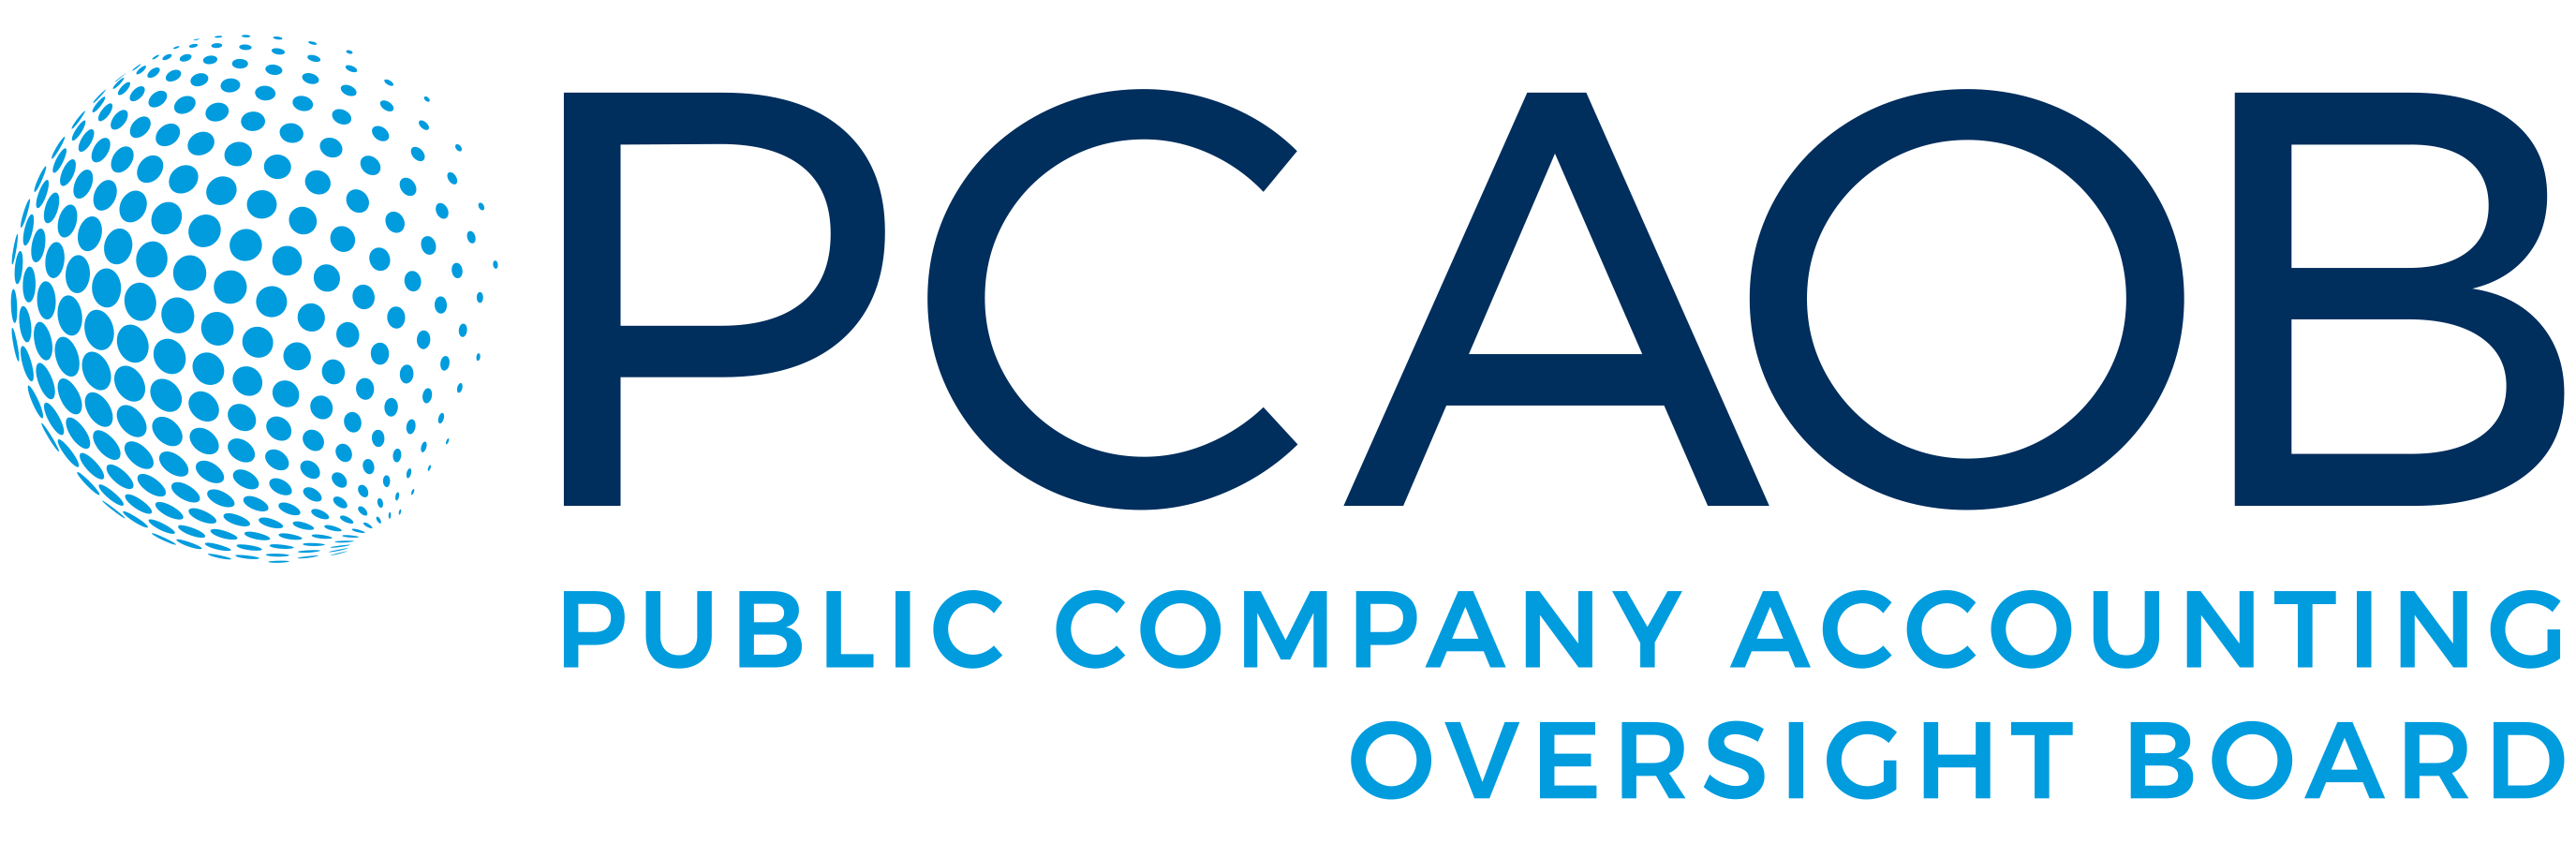 2020-pcaob-logo-2750x900